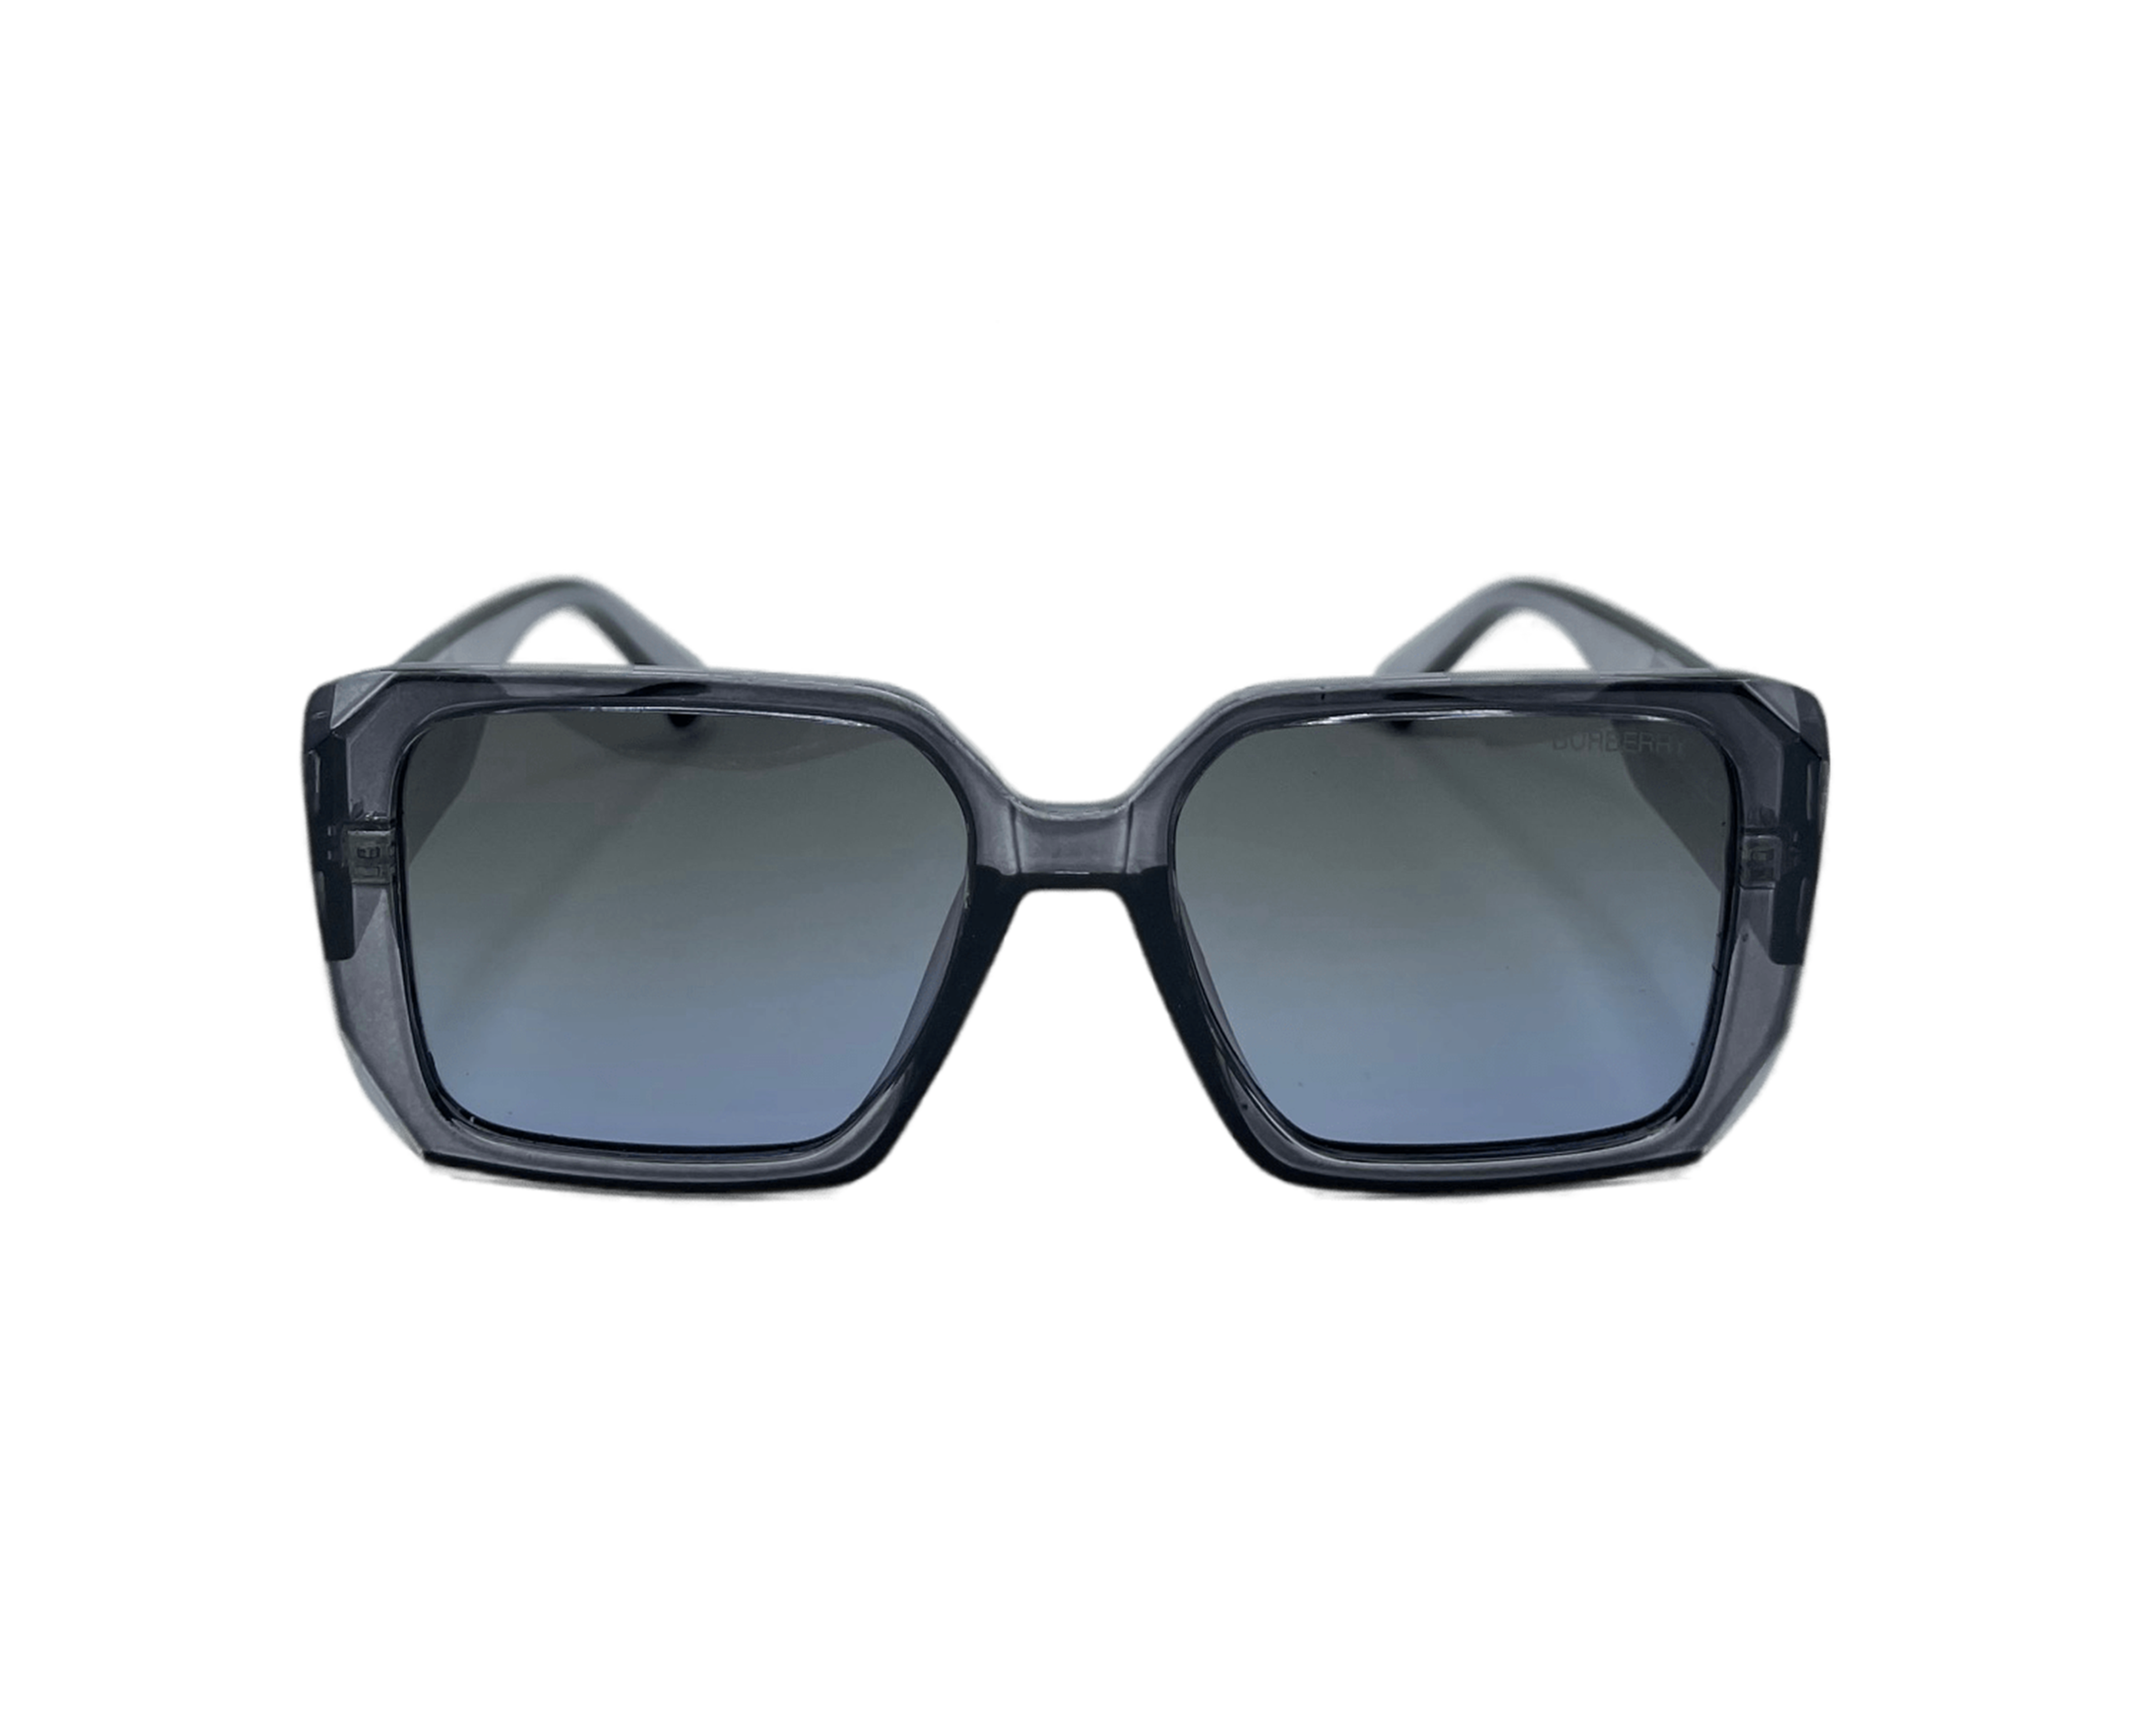 NS Classic - 22339 - Grey - Polarized Sunglasses